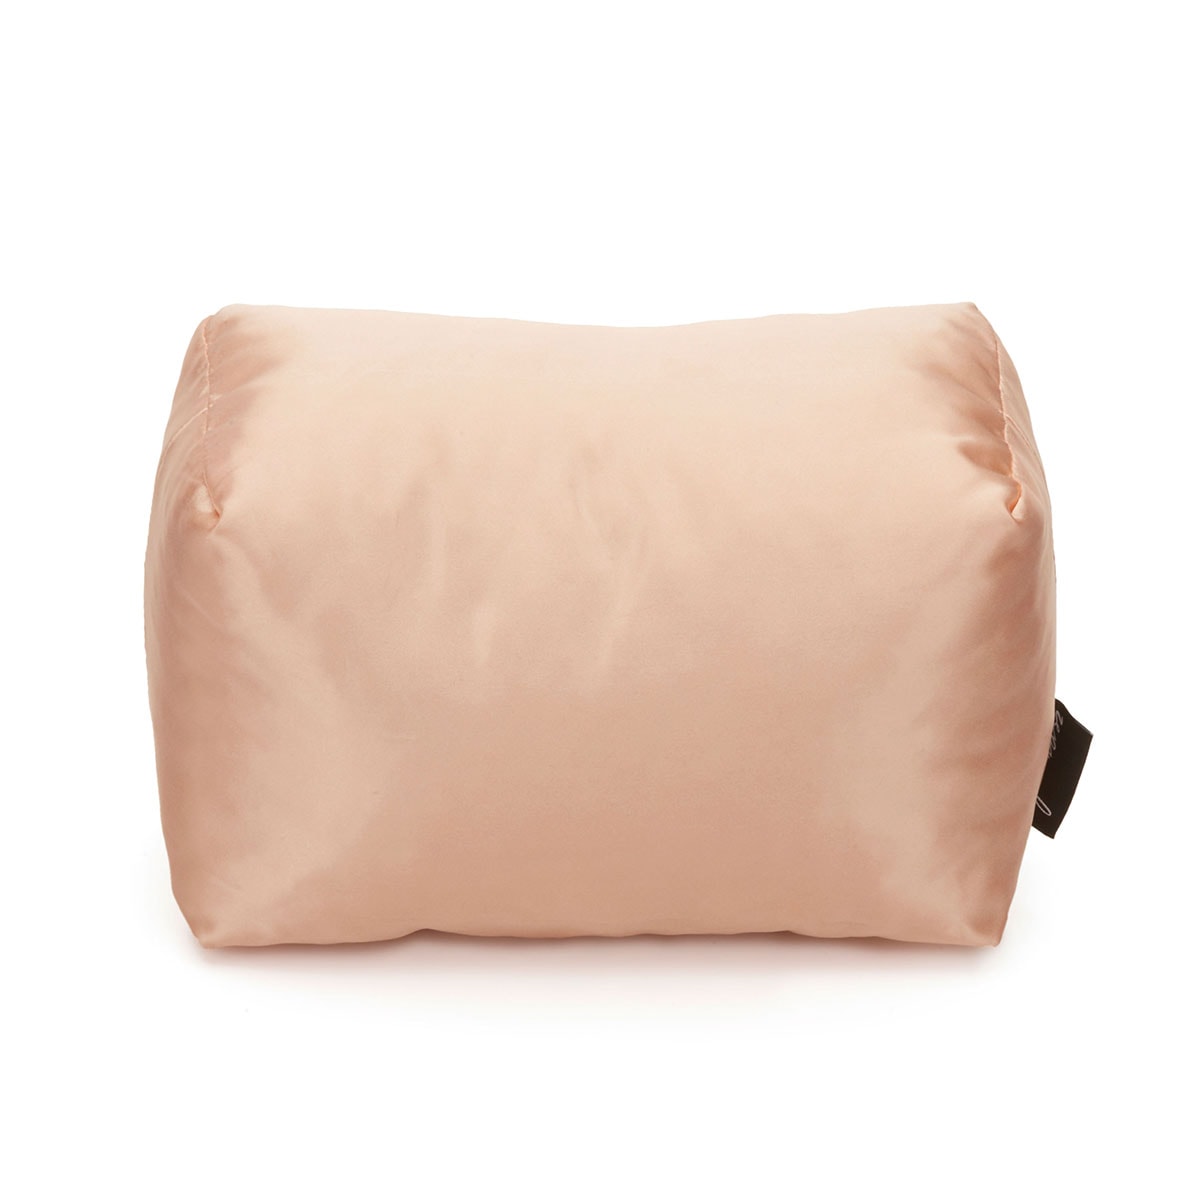 Cream White Faux Fur Pillow Luxury Bag Shaper For Hermes Lindy 26/30